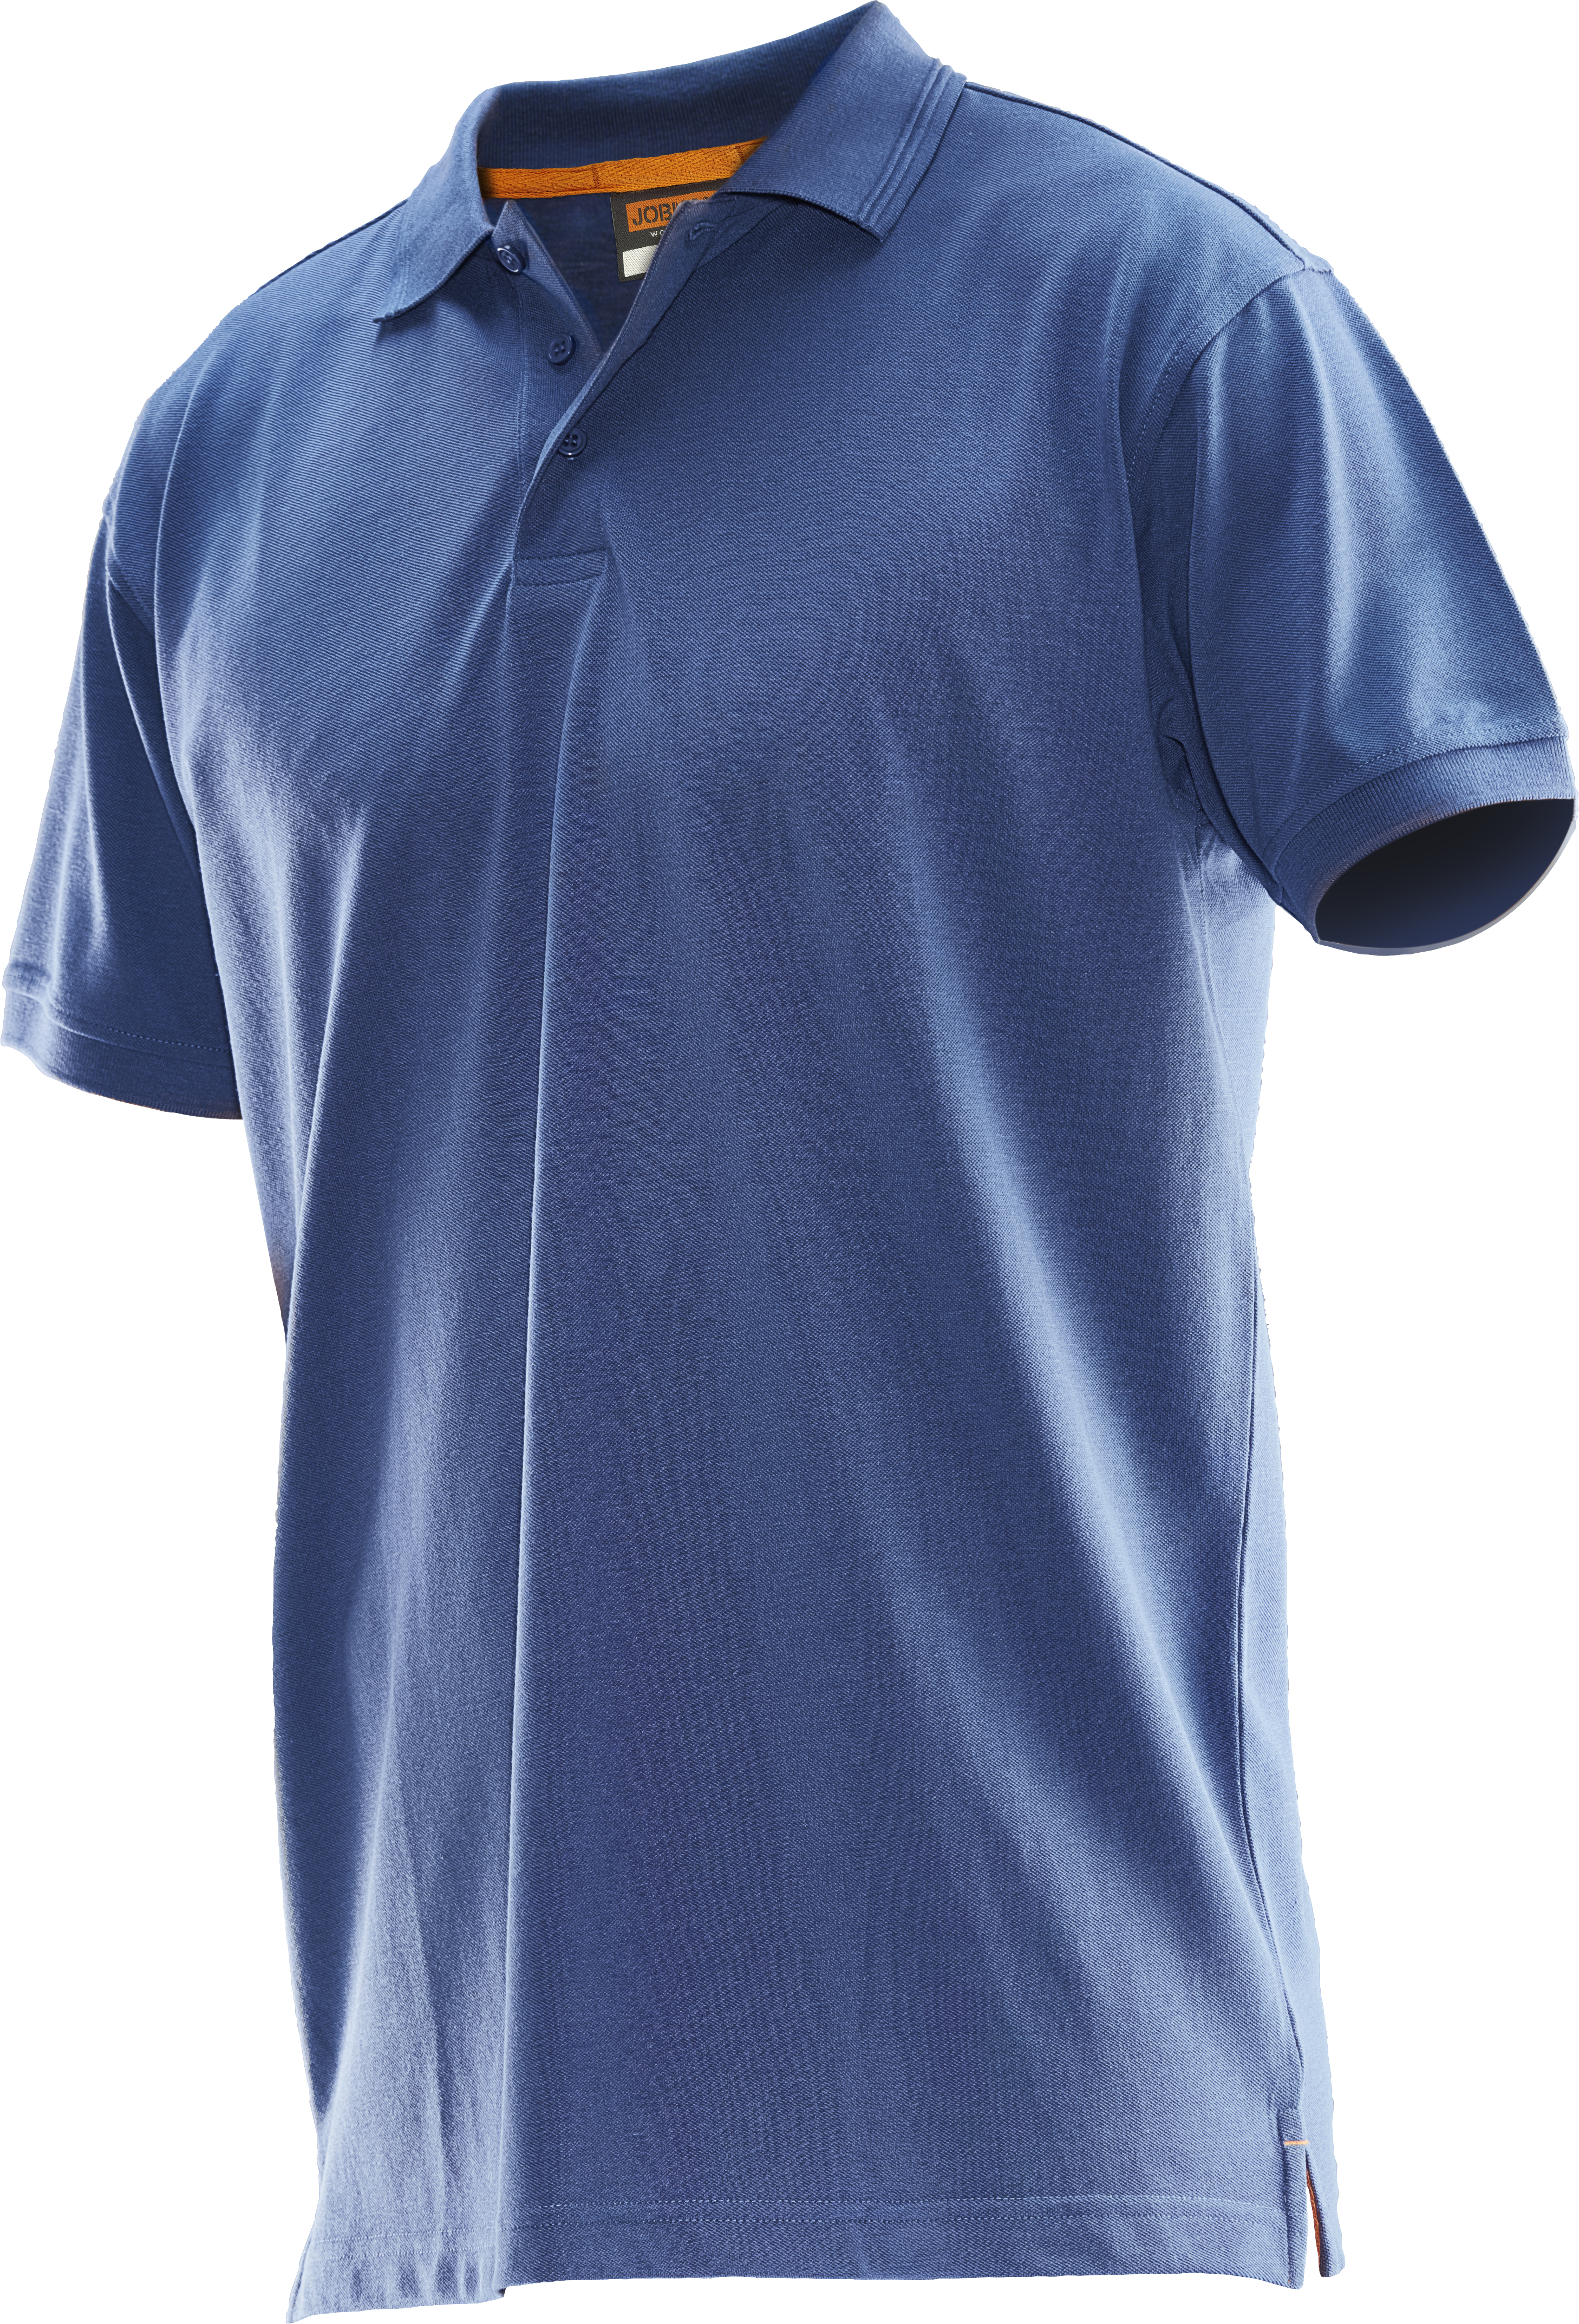 5564 T-shirt polo 3XL bleu ciel